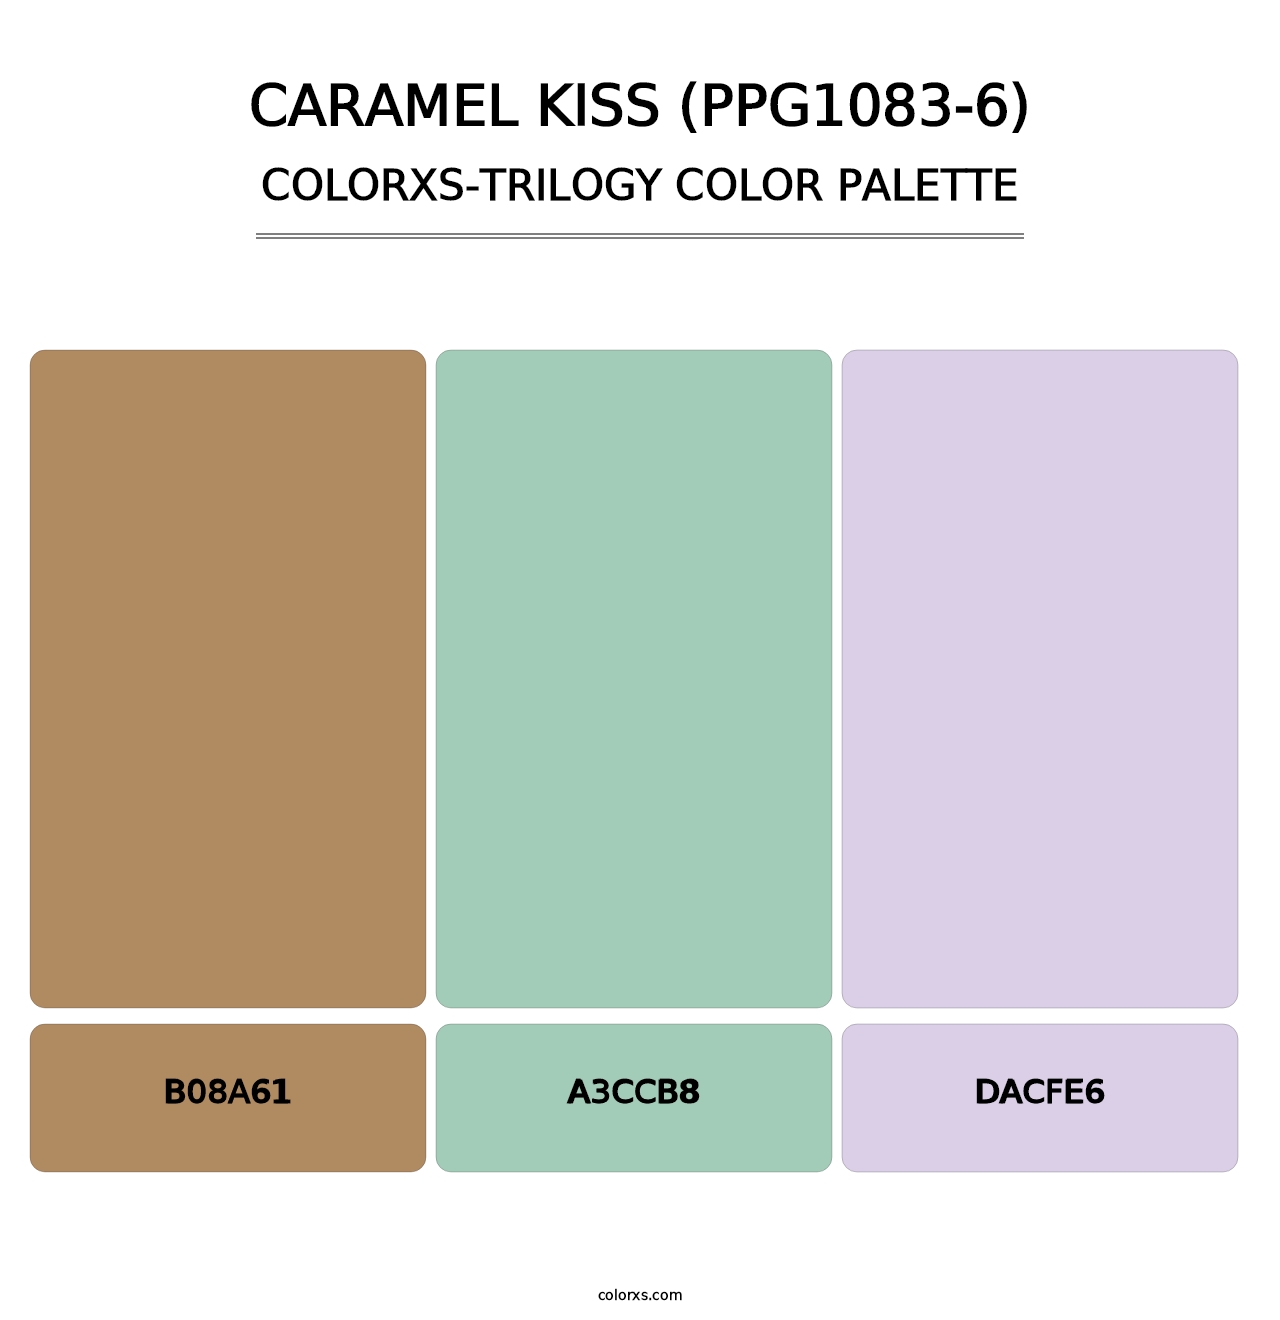 Caramel Kiss (PPG1083-6) - Colorxs Trilogy Palette